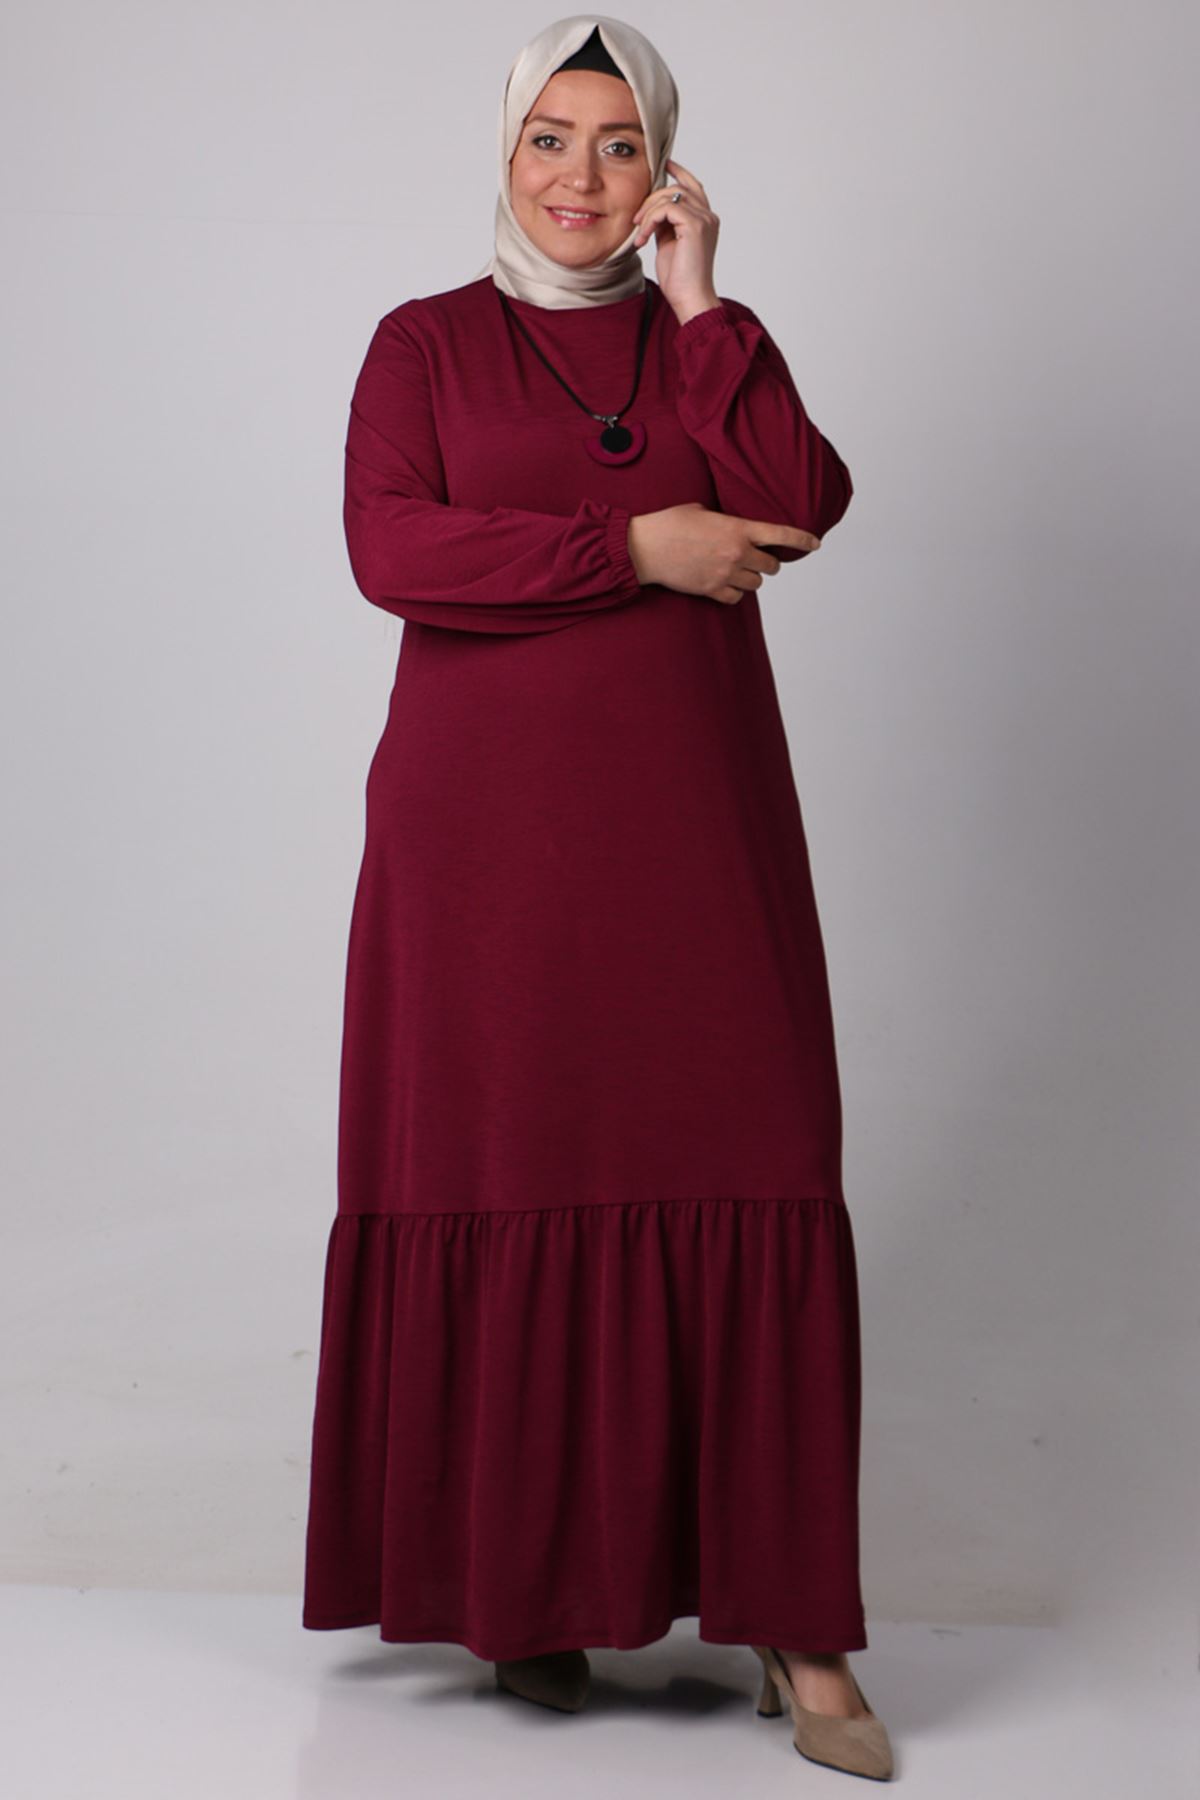 32026 Plus Size Mina Crepe Dress With Pleated Skirt - Fuchsia